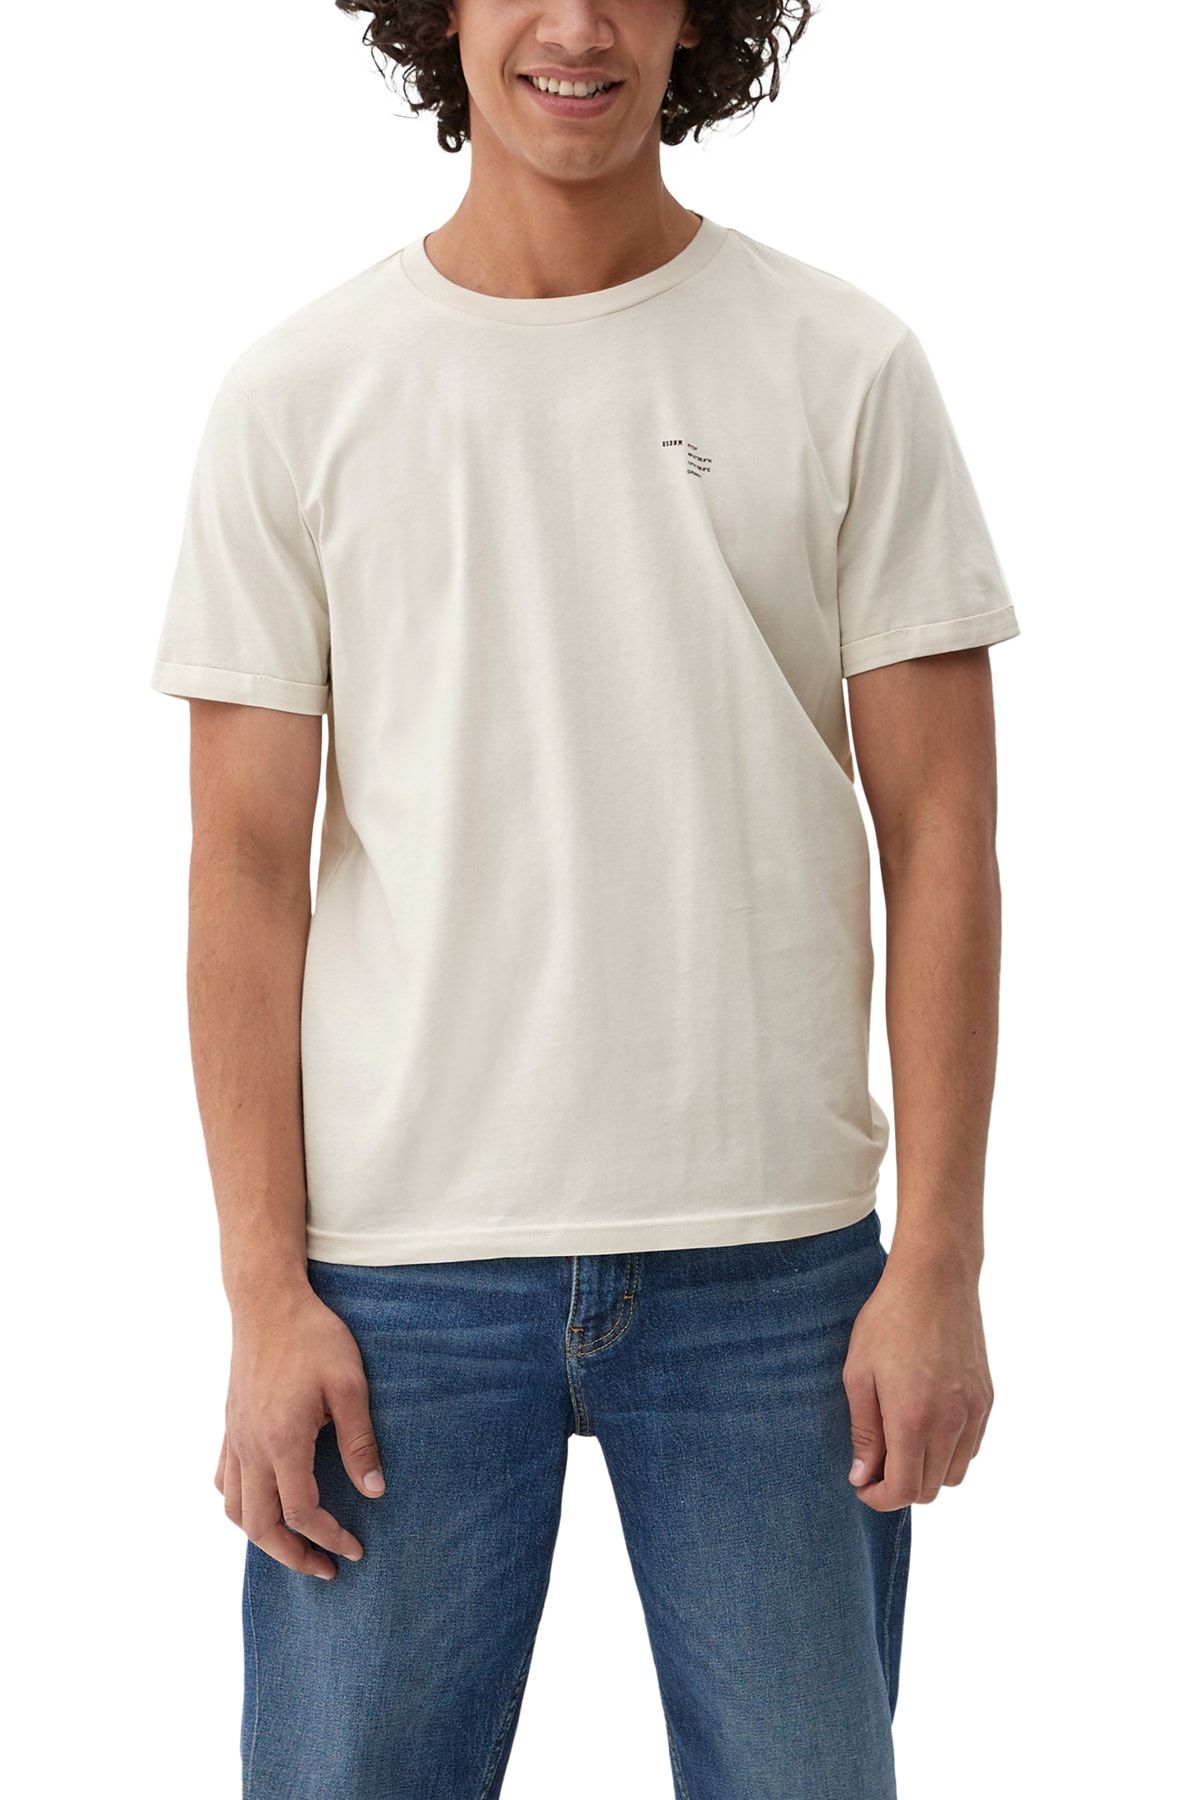 - - fit Trendyol T-Shirt by Regular - s.Oliver QS White